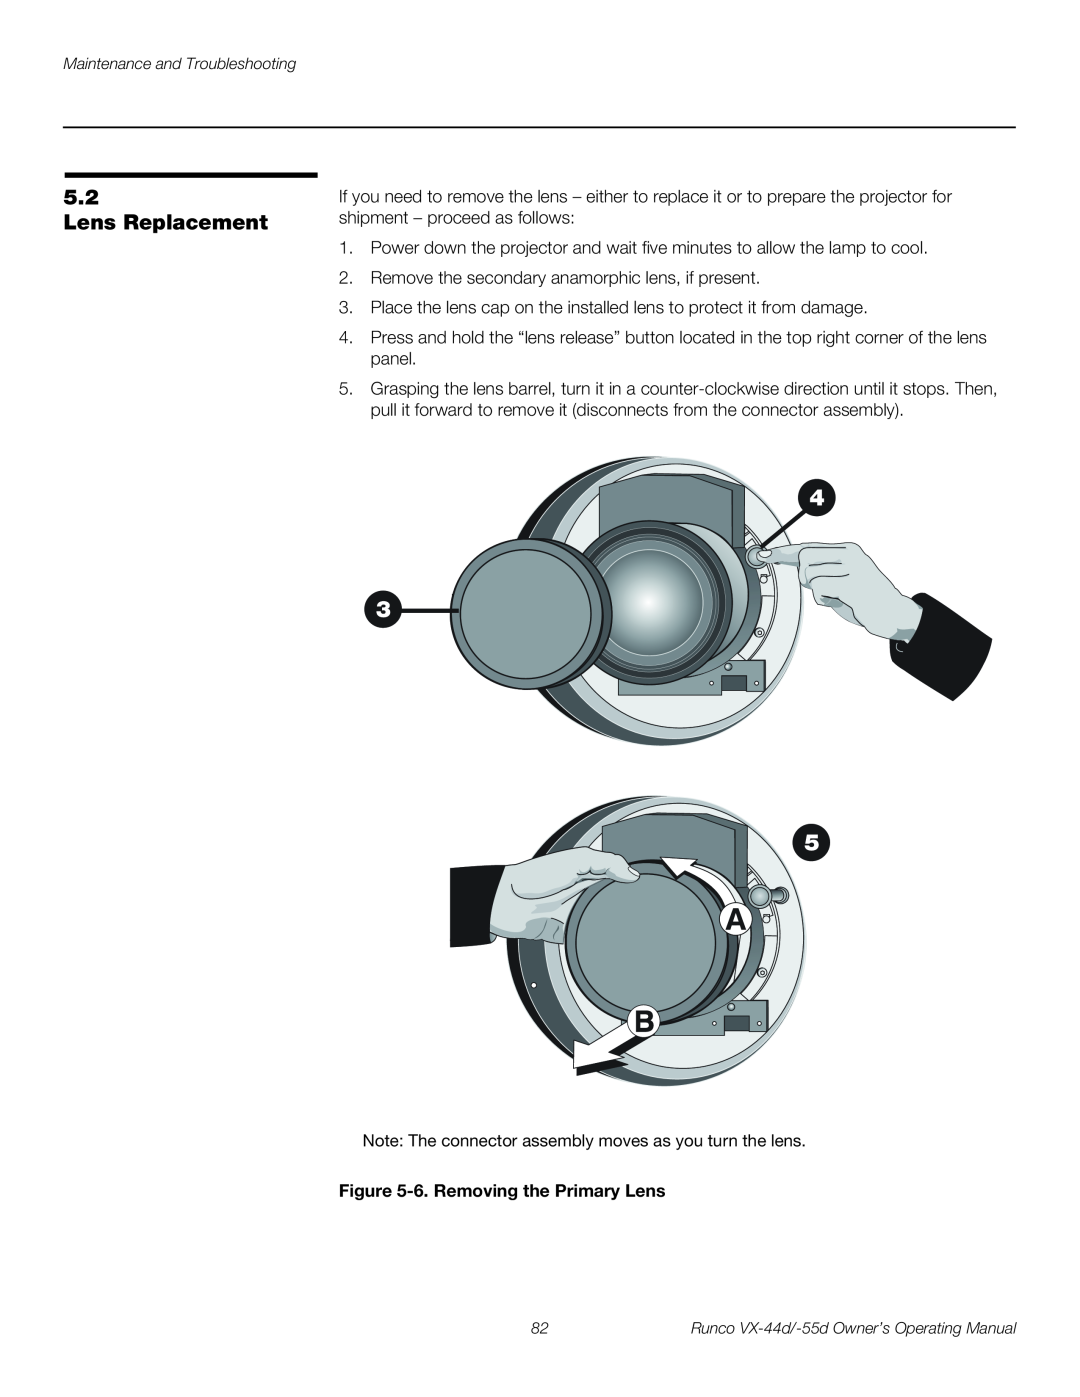 Runco VX-44D, VX-55D manual Lens Replacement, 6. Removing the Primary Lens 